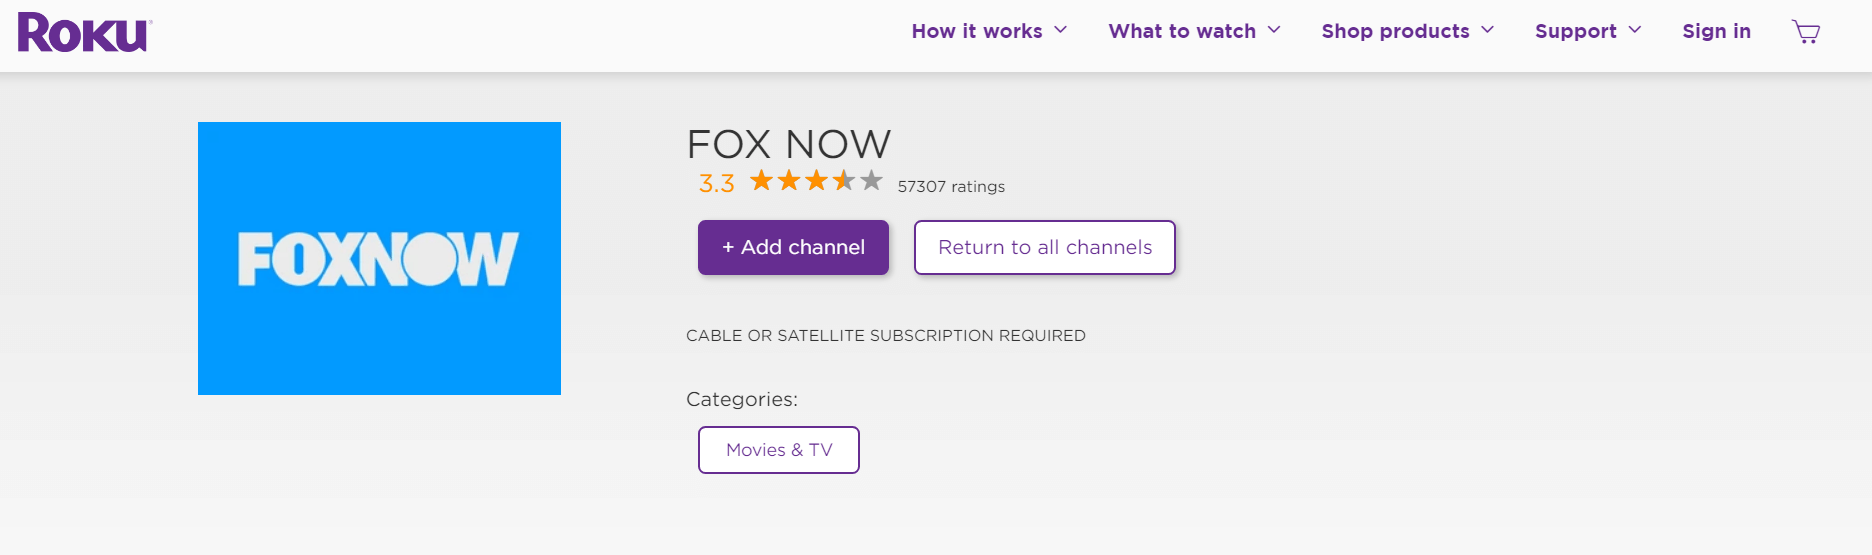 fox-now-app-on-roku-in-Australia